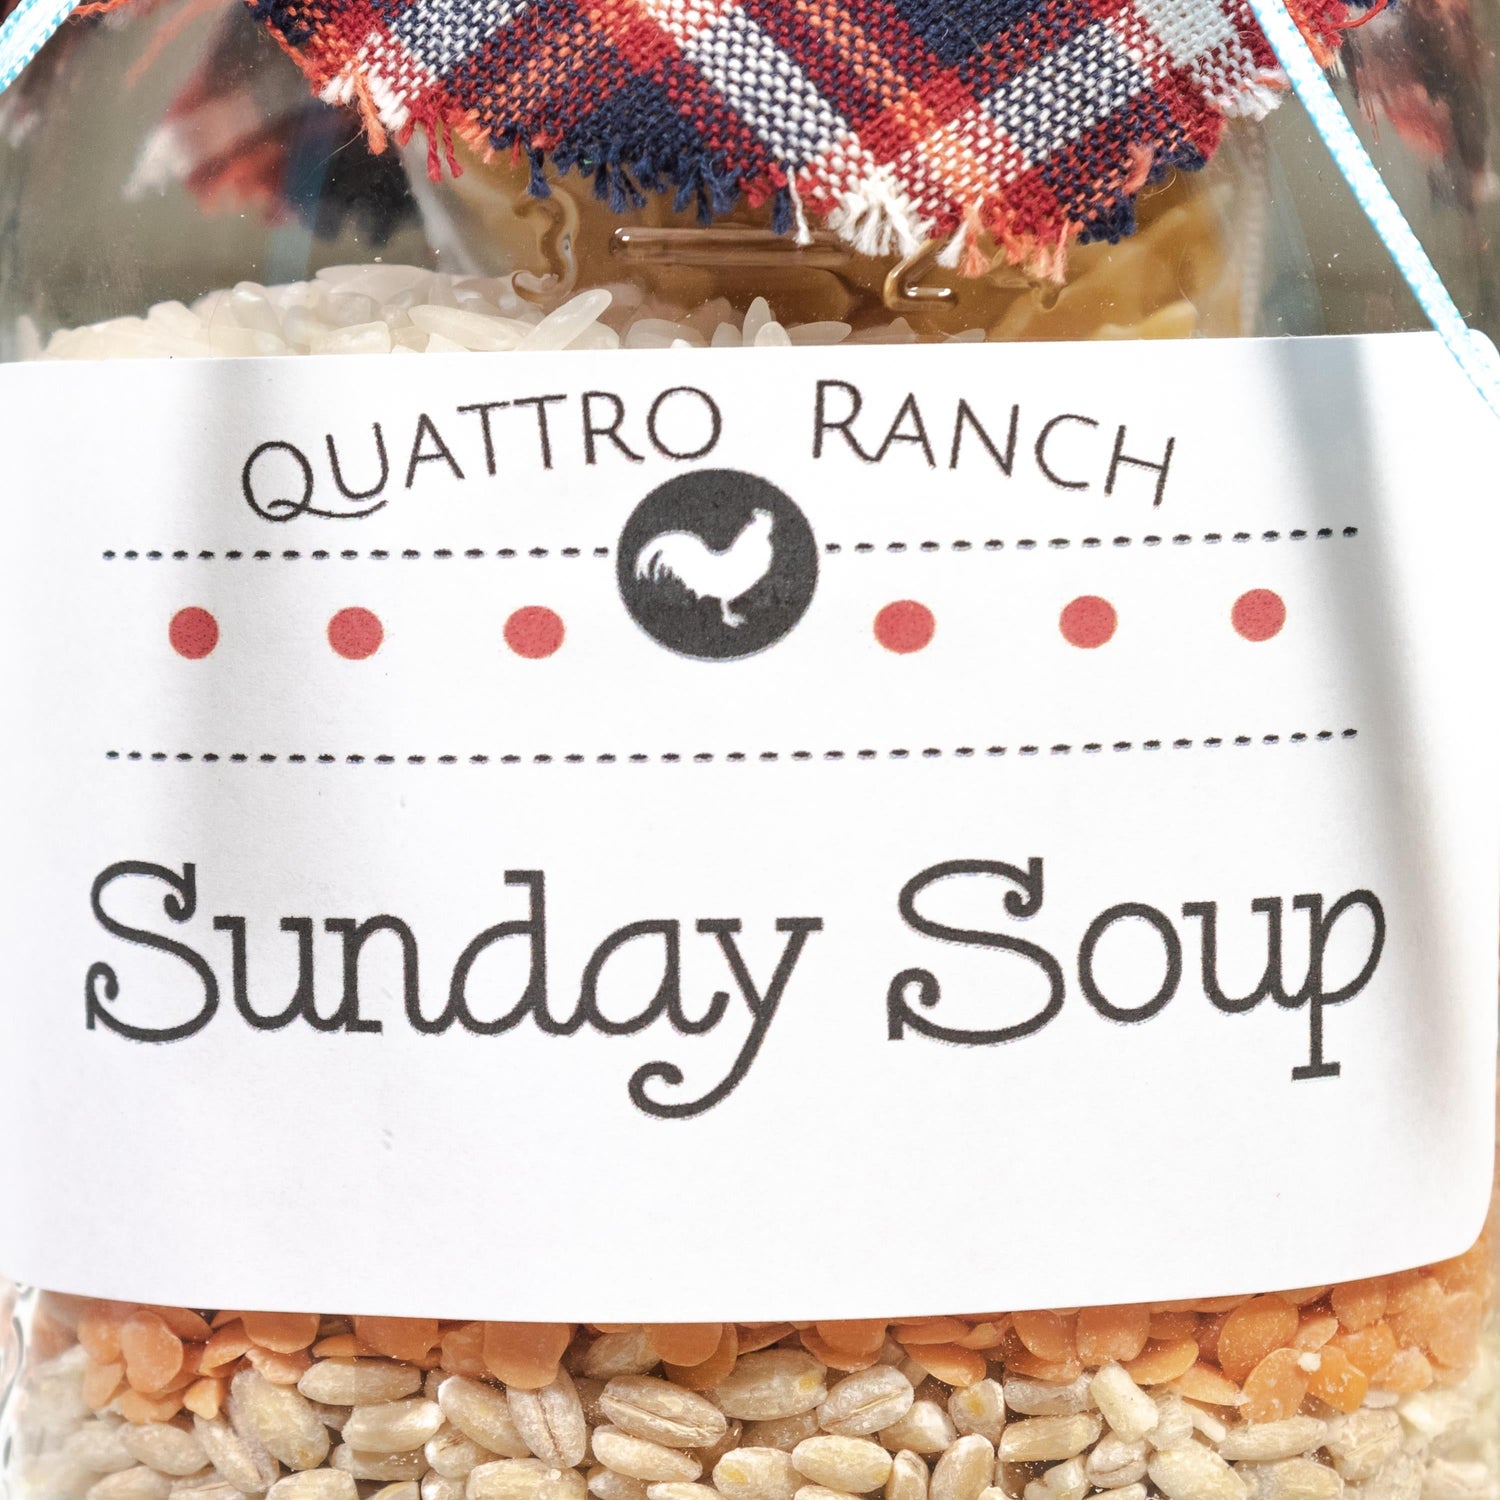 Quattro Ranch Sunday Soup